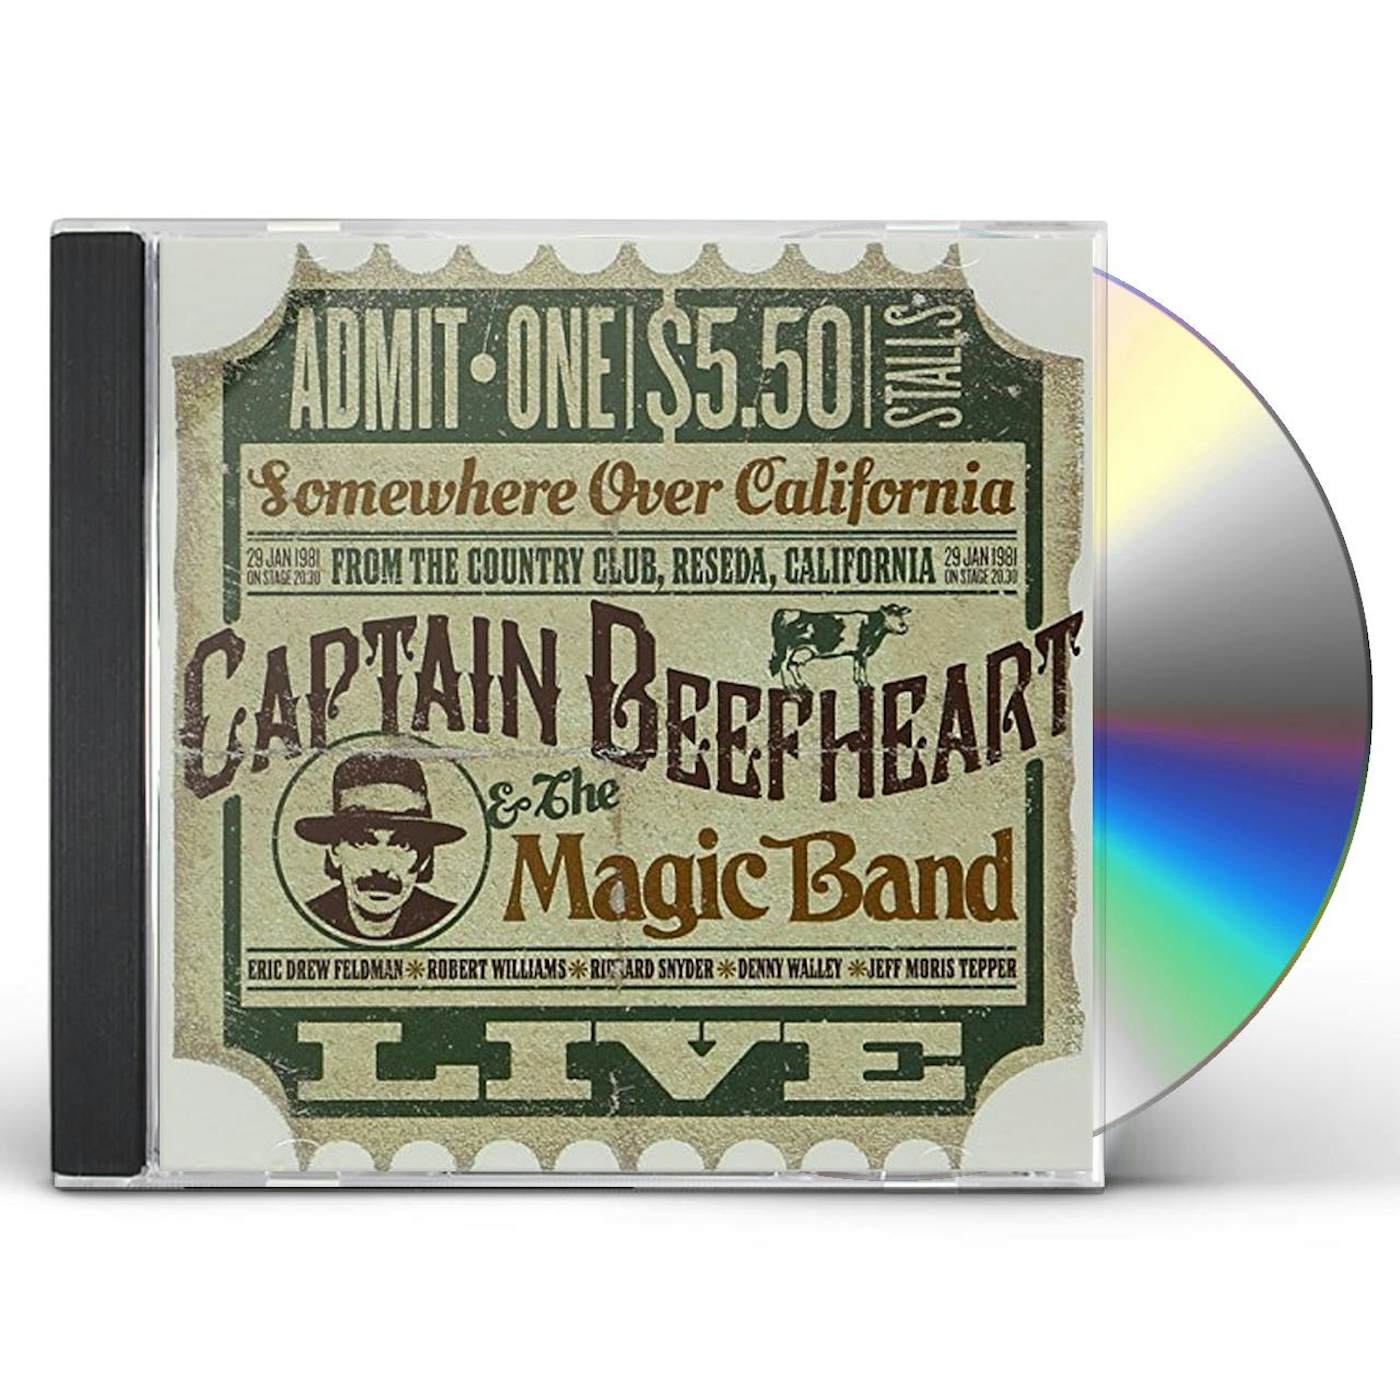 Captain Beefheart & His Magic Band LIVE AT THE COUNTRY CLUB RESEDA CALIFORNIA 1981 CD